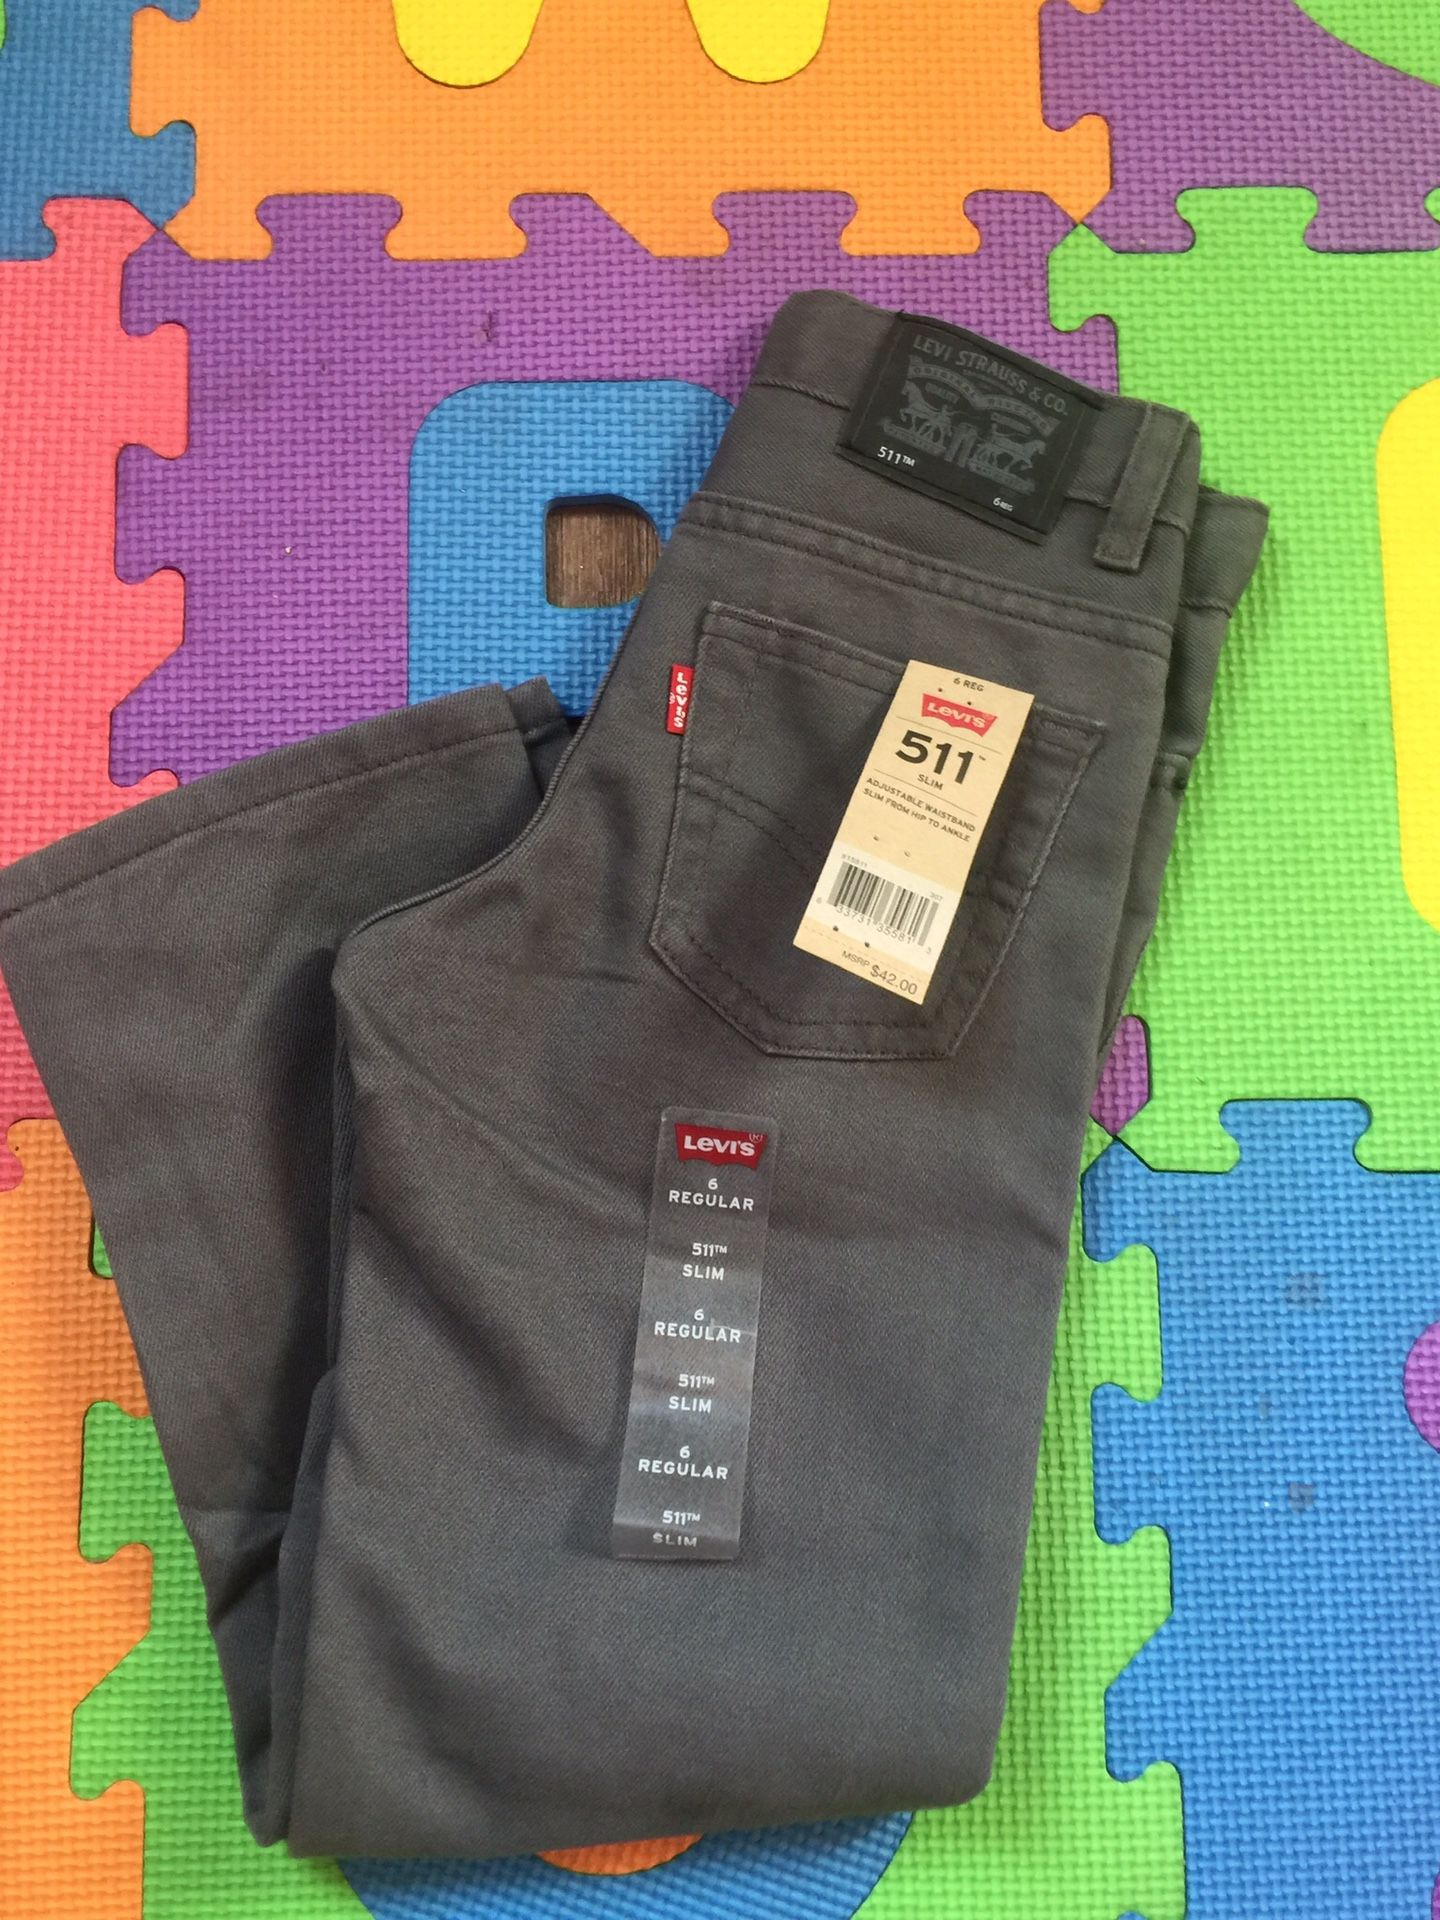 Kids 511 Levi’s jeans size 6